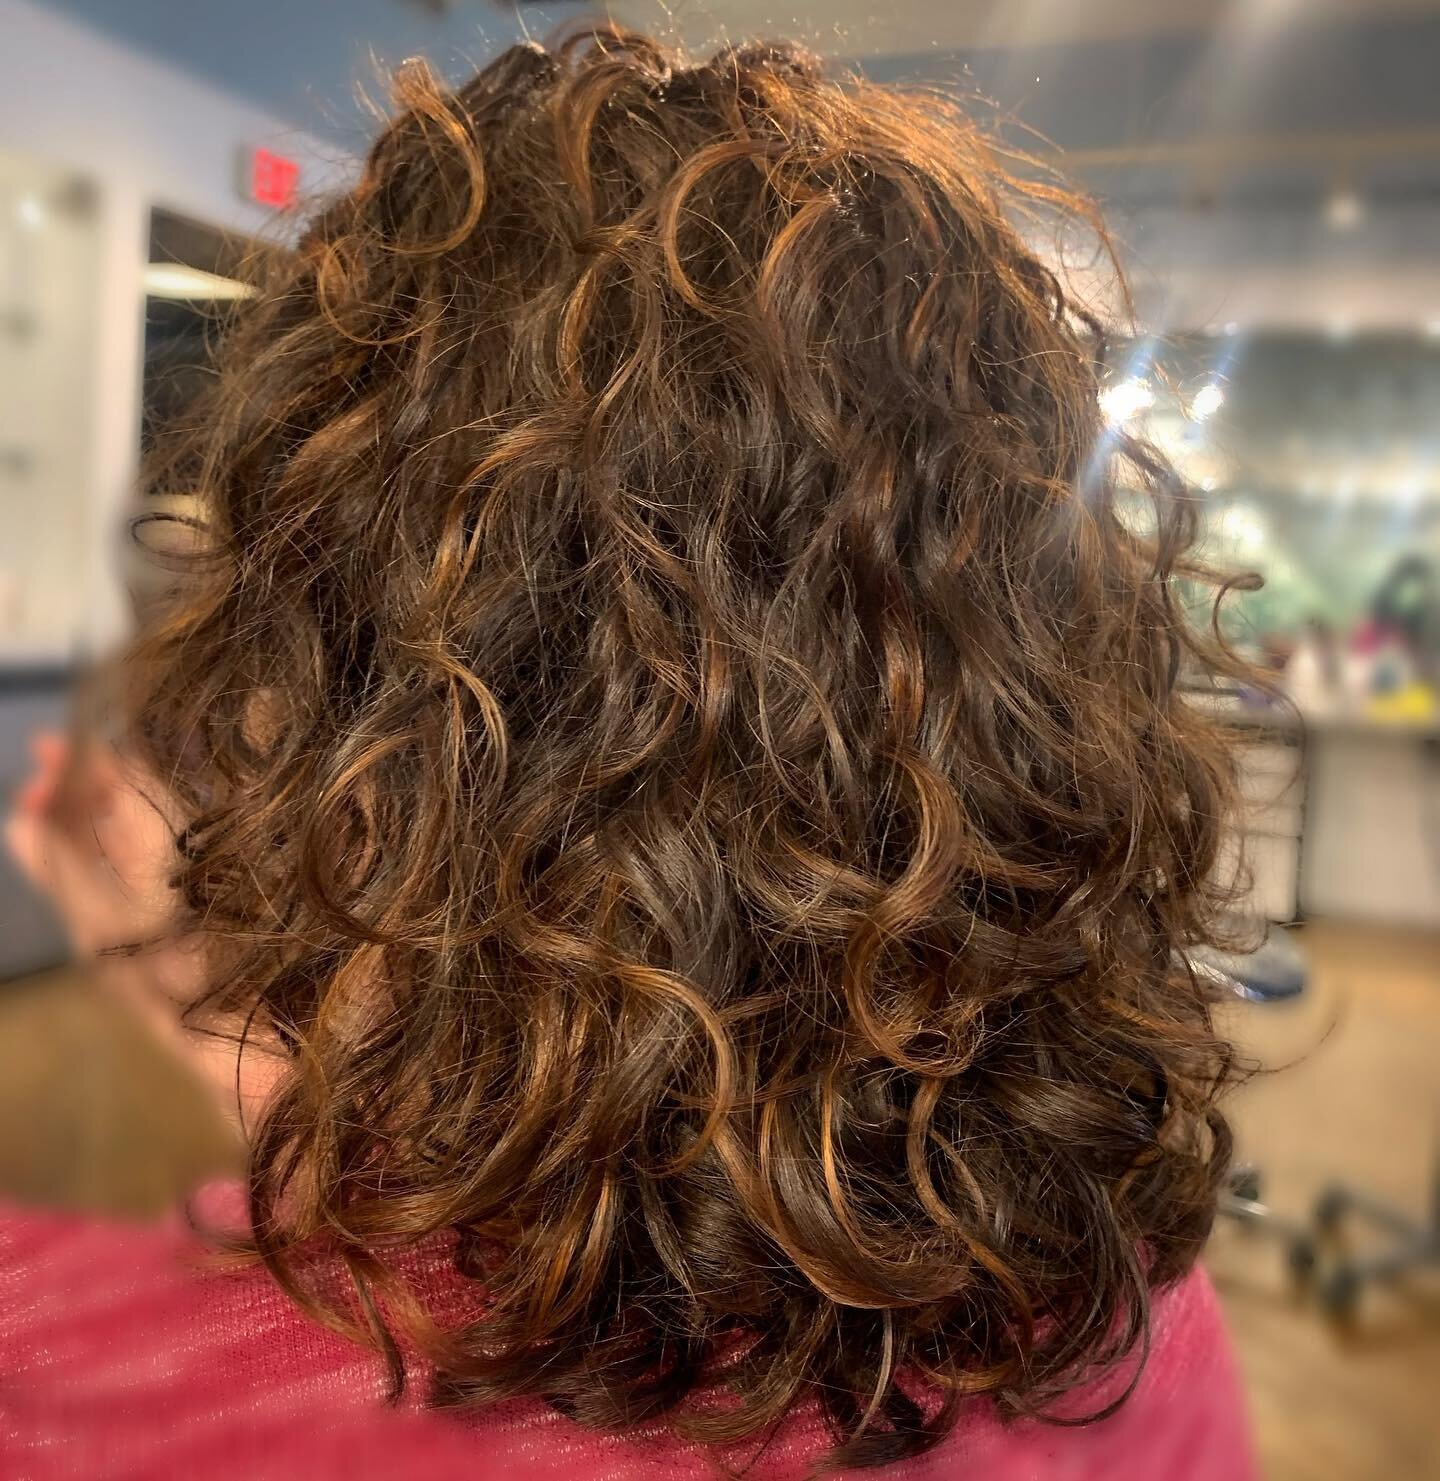 Caramel Curls 🤎 

STYLIST: Devacut &amp; Color @kerri_goodwin 
.
.
.
#curlycut #curlyhair #dimensionalbrunette #colorist #bouncecurl #devacut #beauty #salon #natick #caramel #hairpainting #warmtones #curlyhairstyles #chocolate